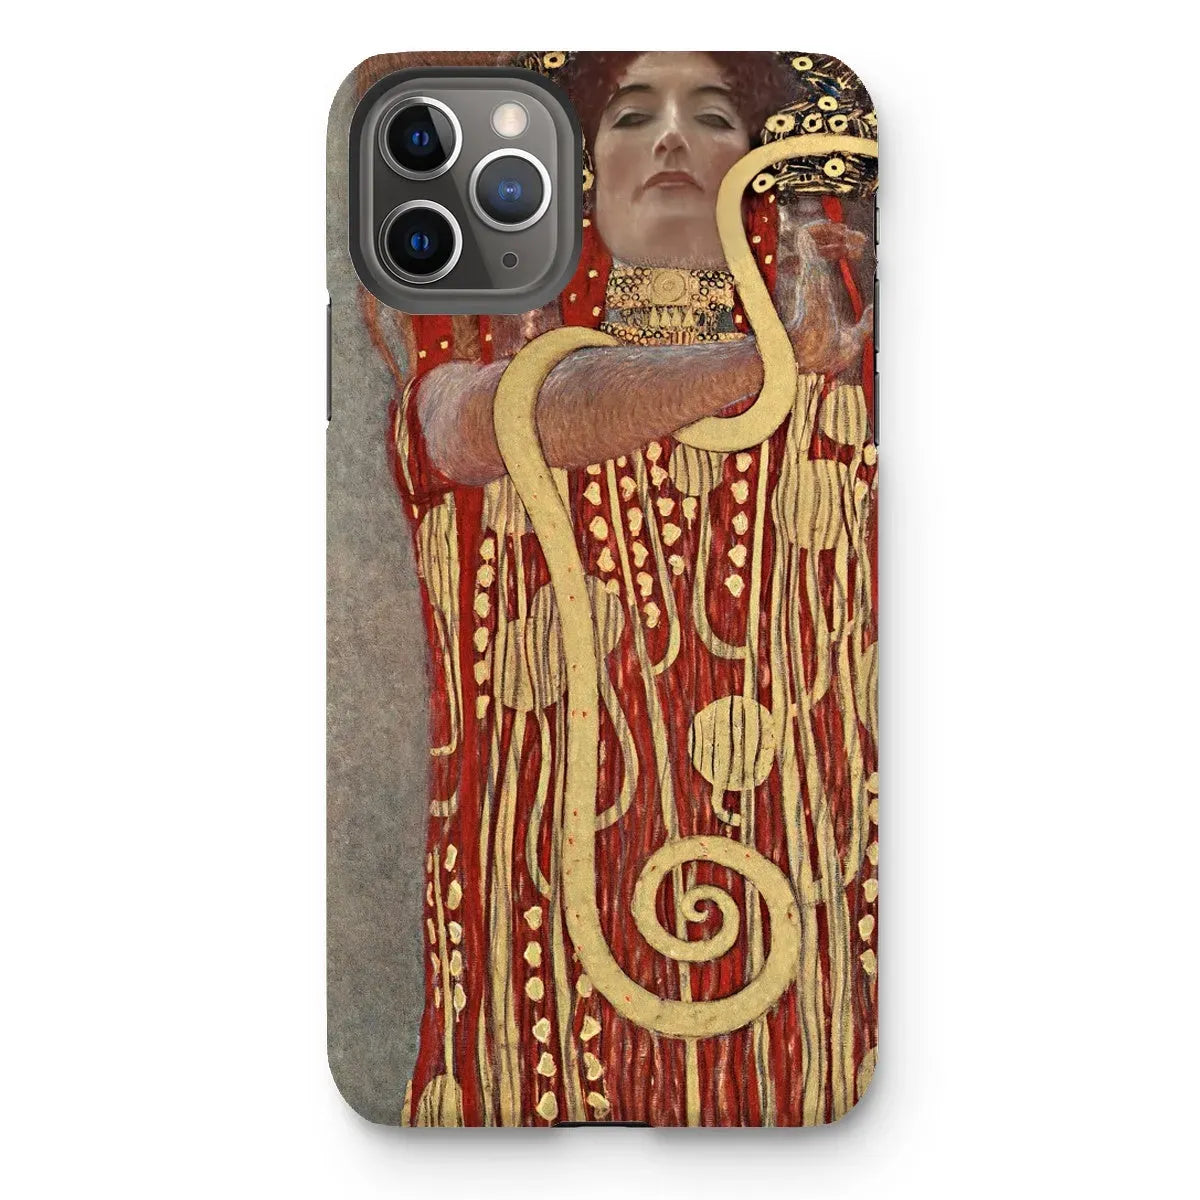 Hygieia - Vienna Succession Phone Case - Gustav Klimt - Mobile Phone Cases - Aesthetic Art